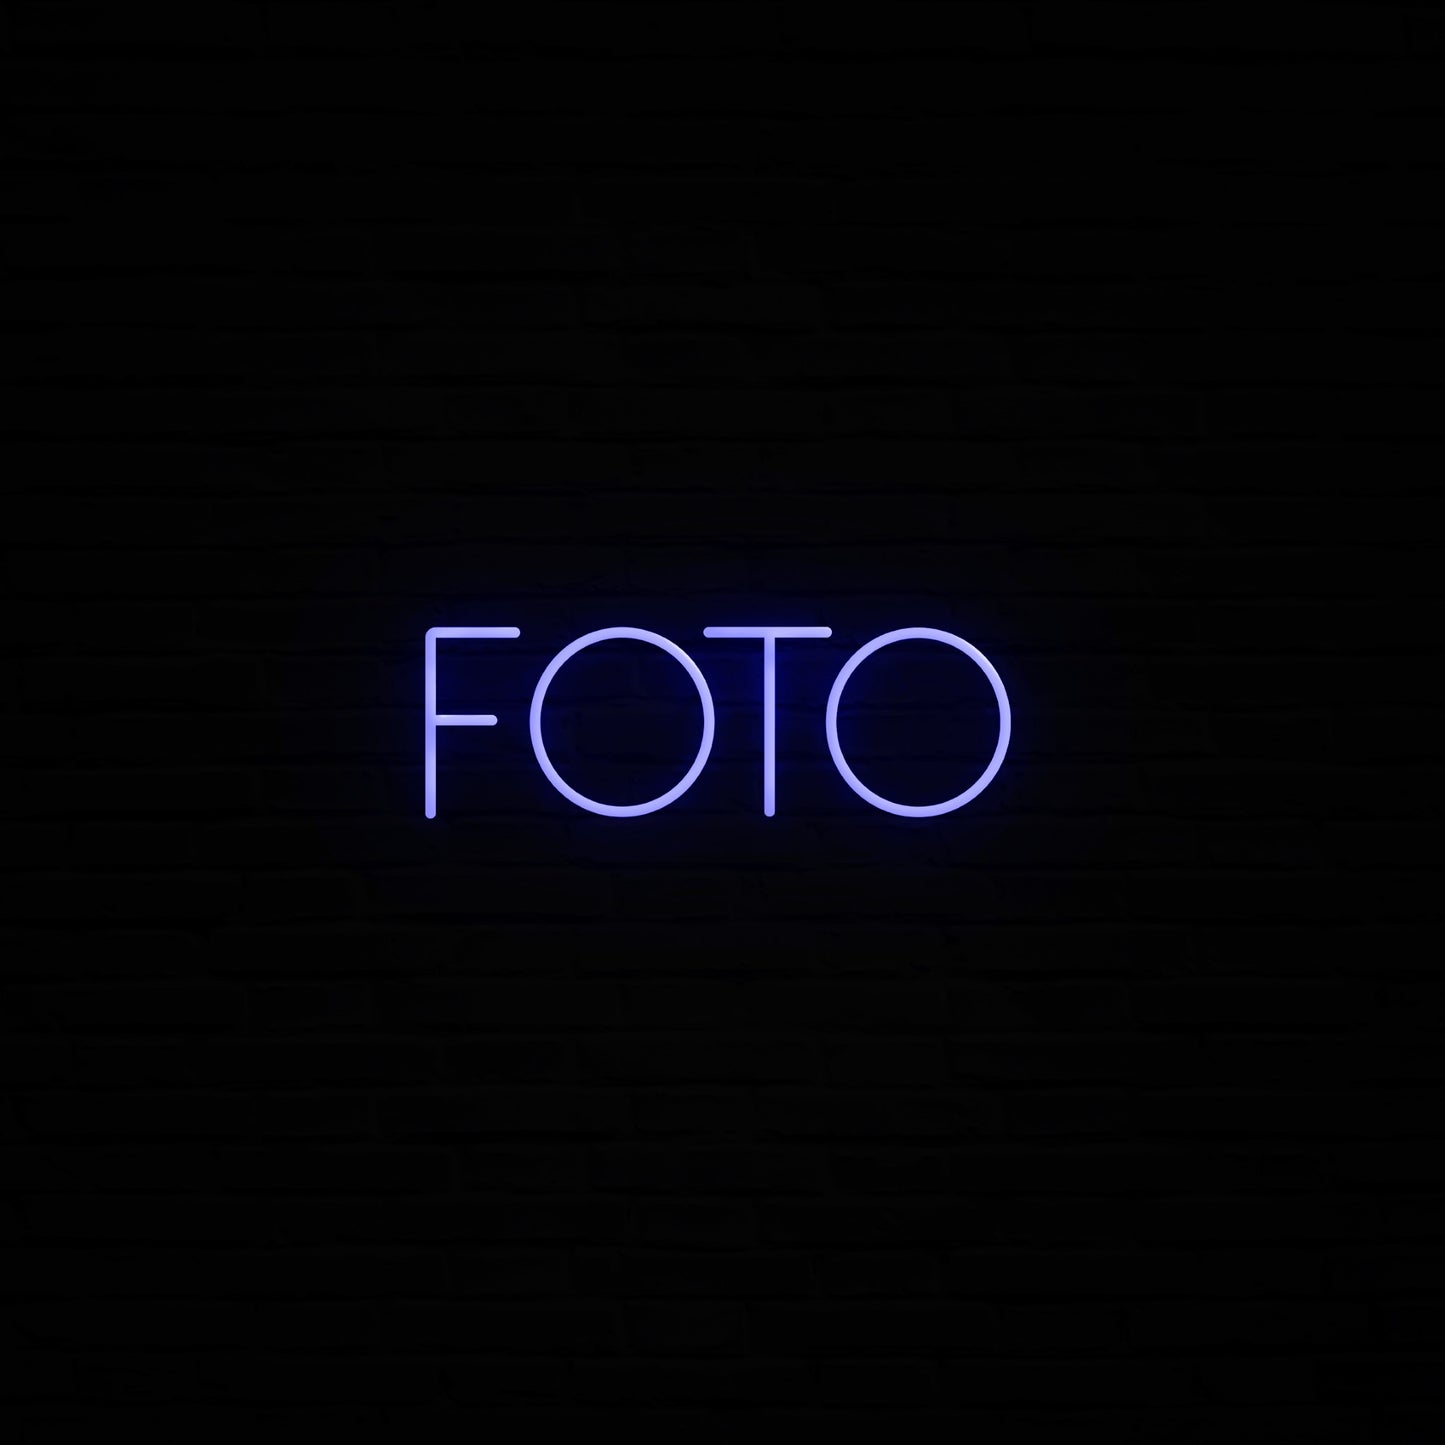 Foto Neon LED